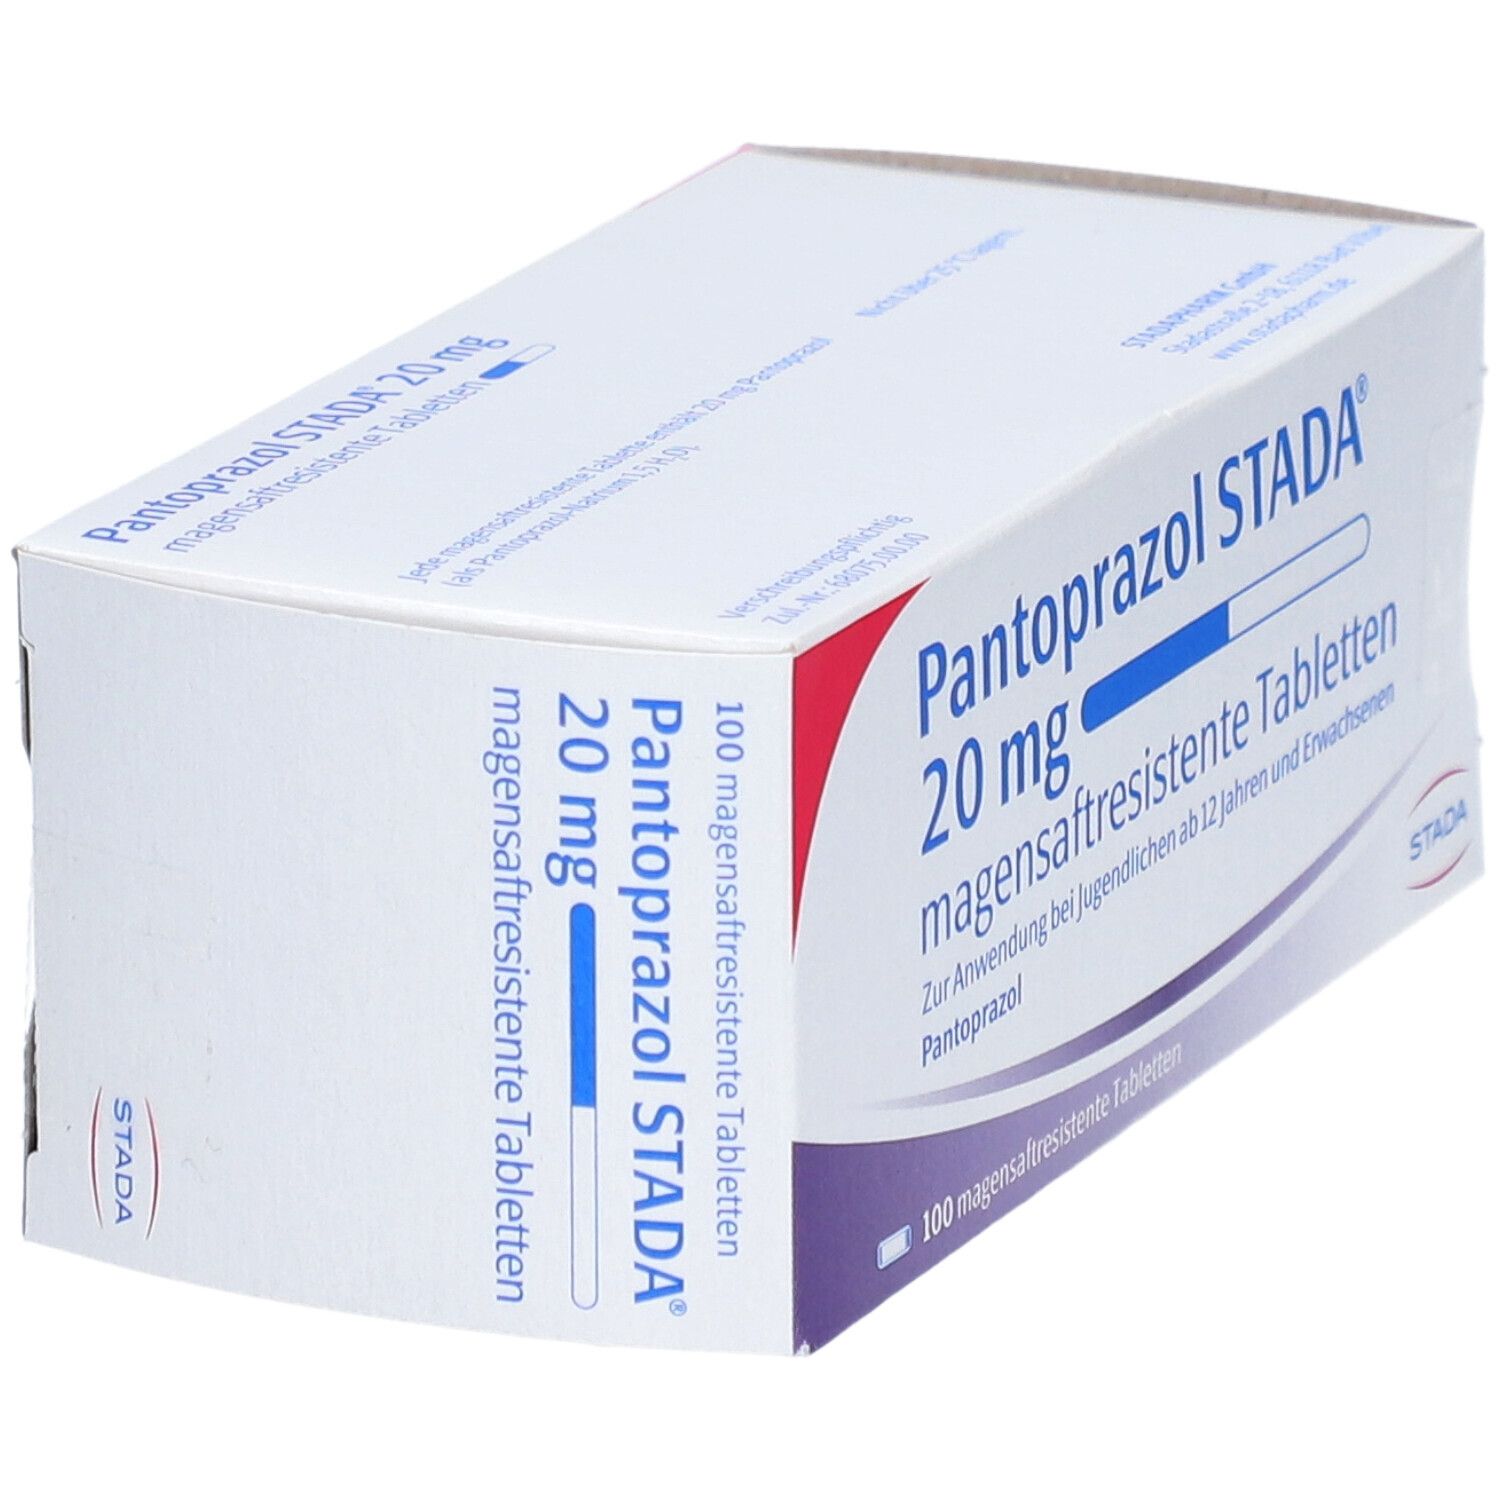 Pantoprazol STADA® 20 mg